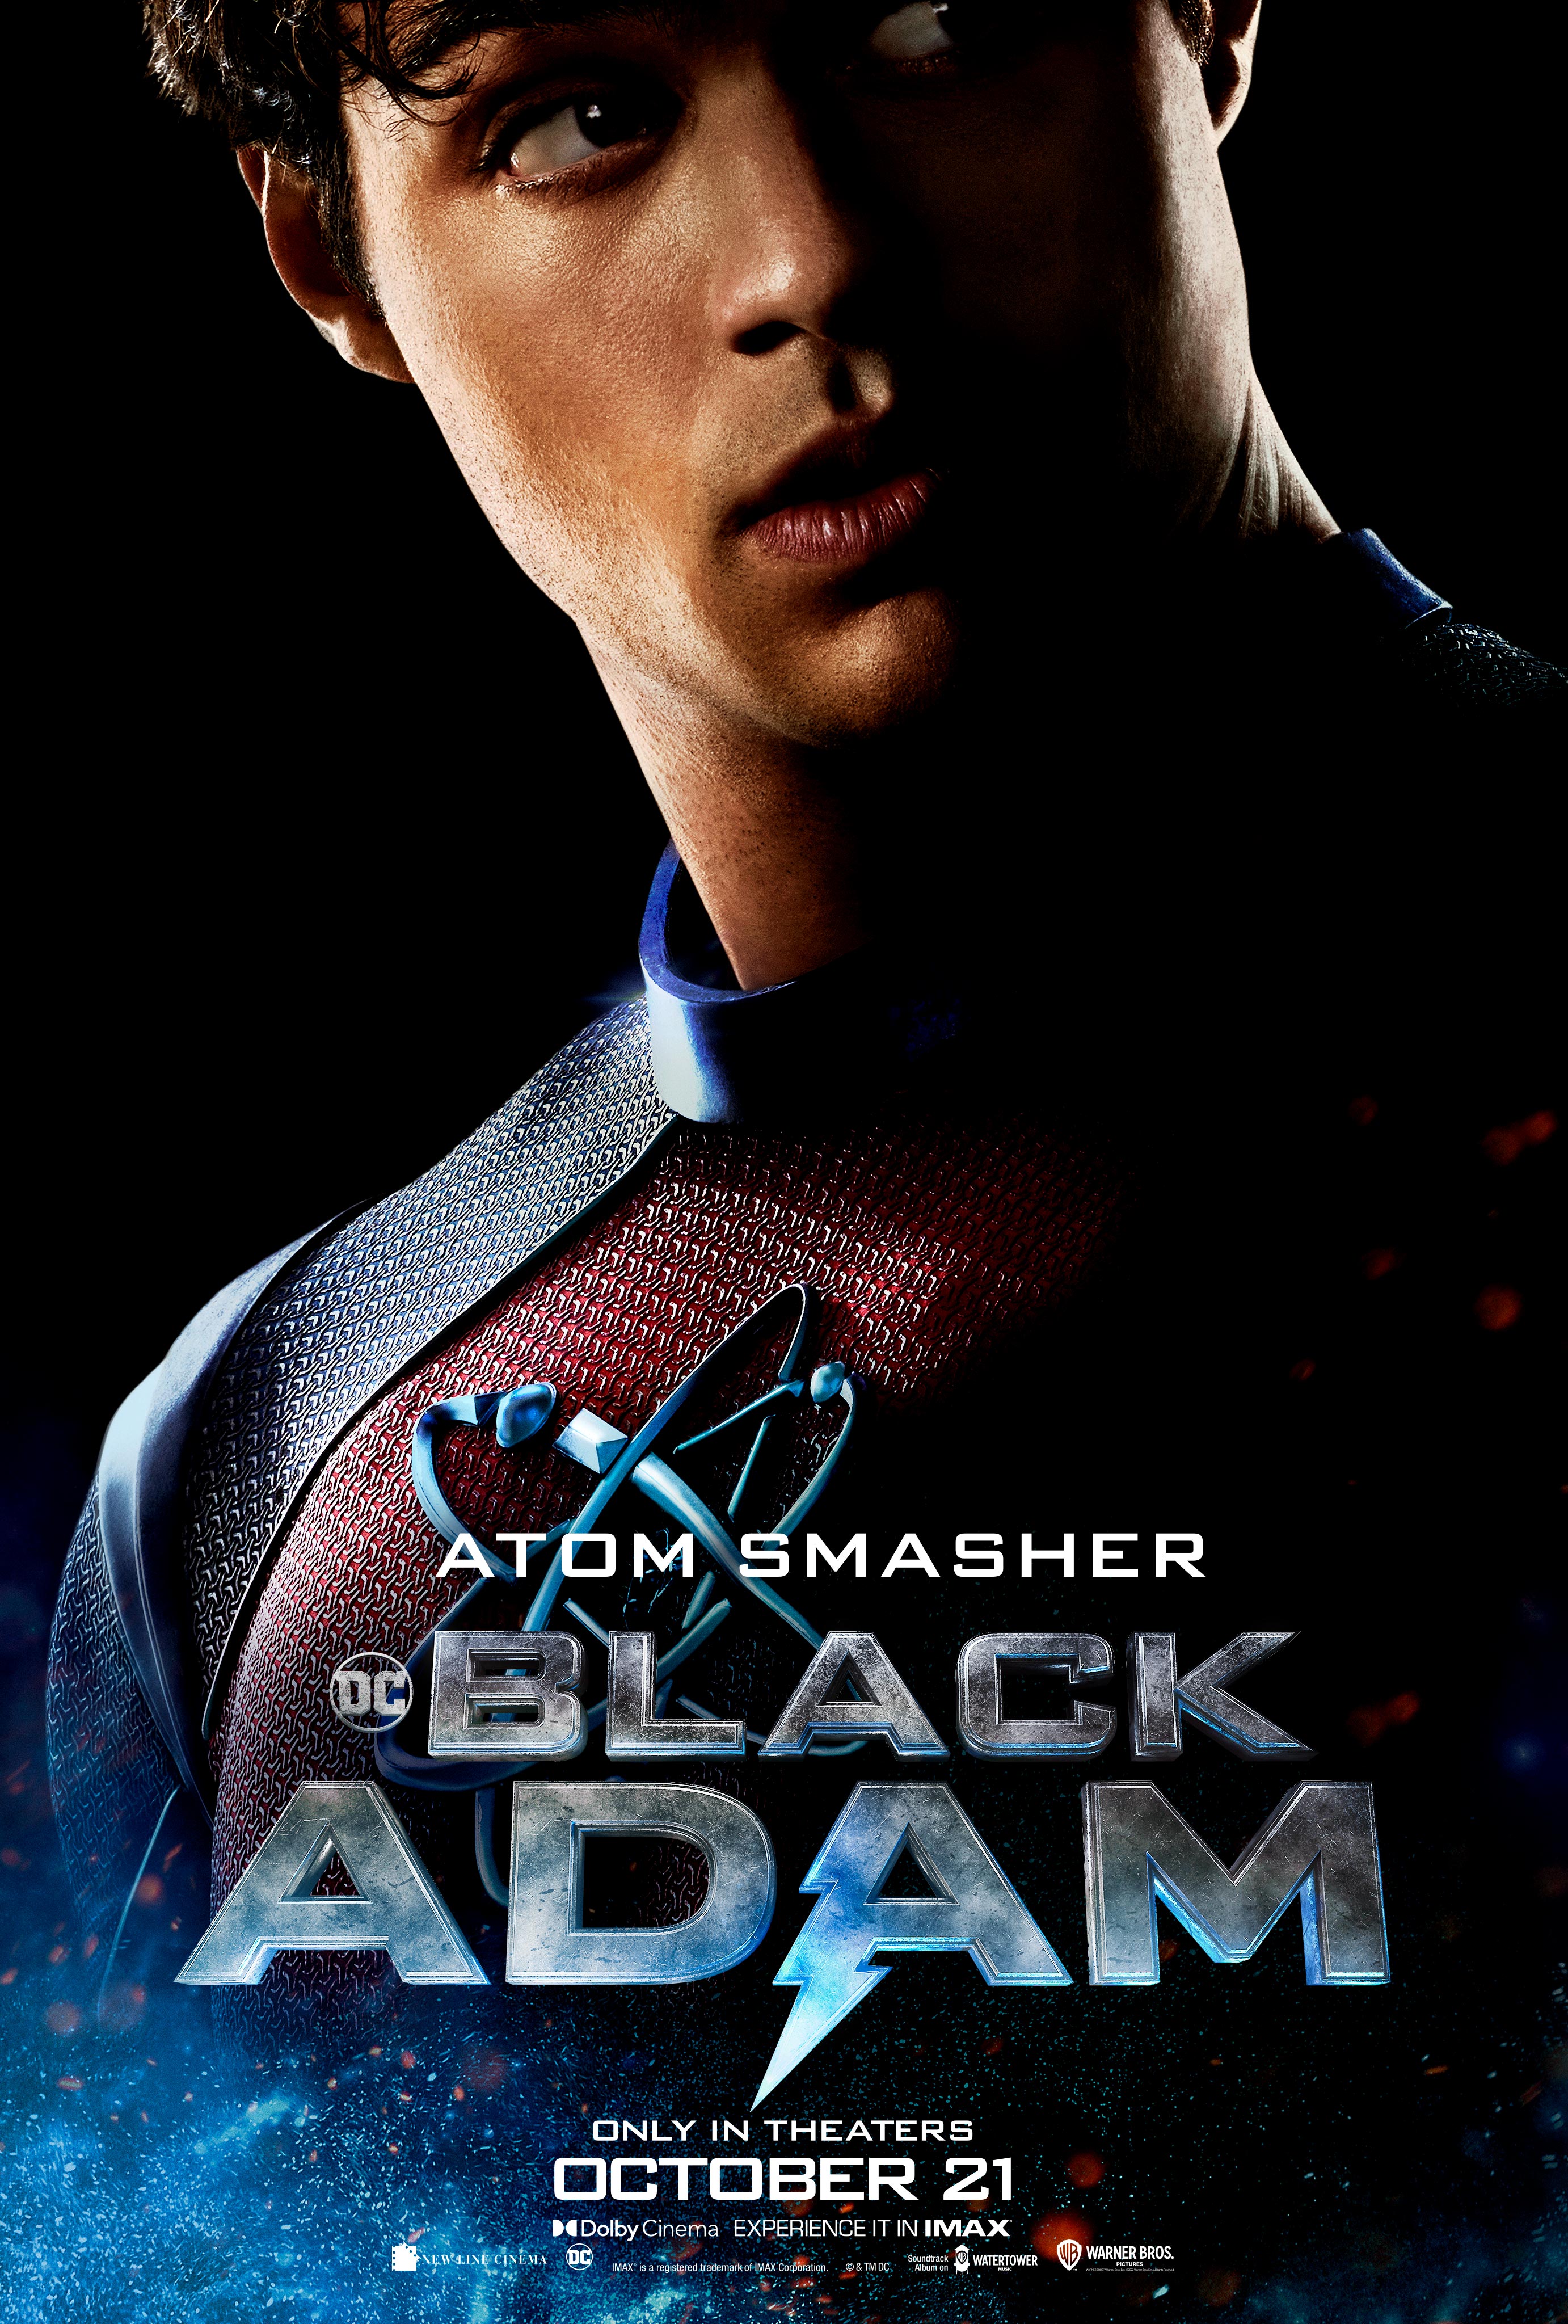 Warner Bros. releases Black Adam character posters